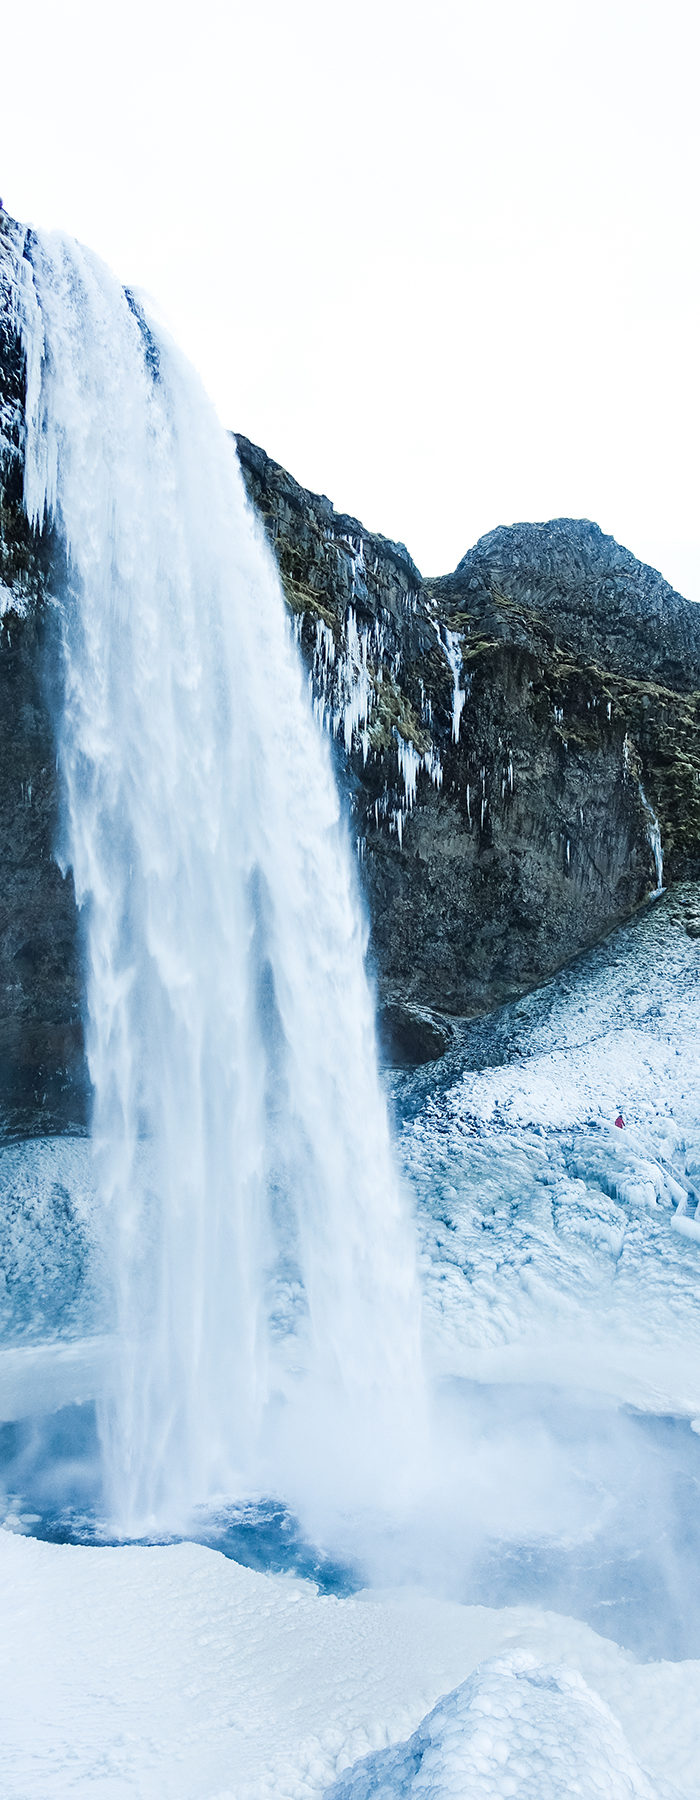 Alyssa Campanella The A List Favorite European Honeymoon Destinations Iceland